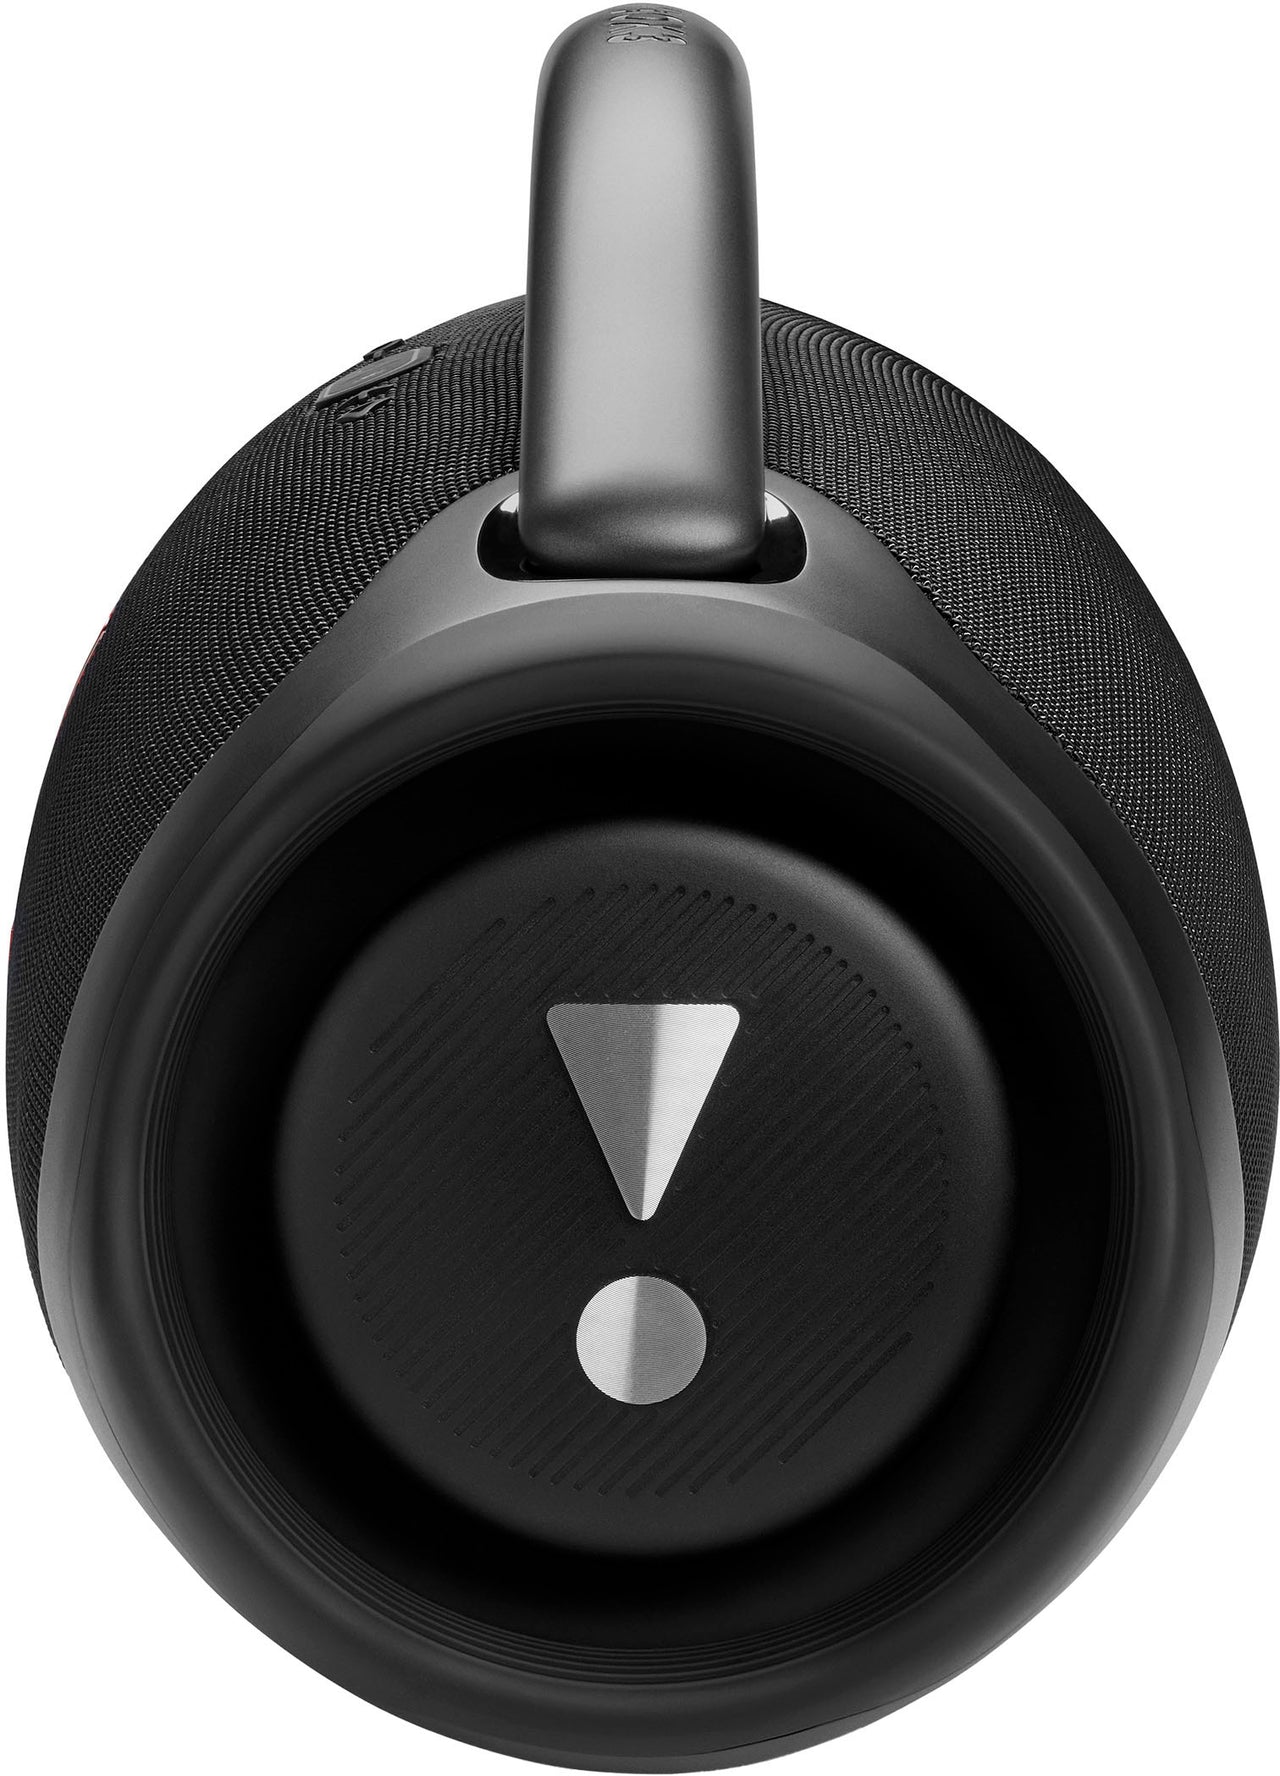 JBL - Boombox3 Portable Bluetooth Speaker - Black